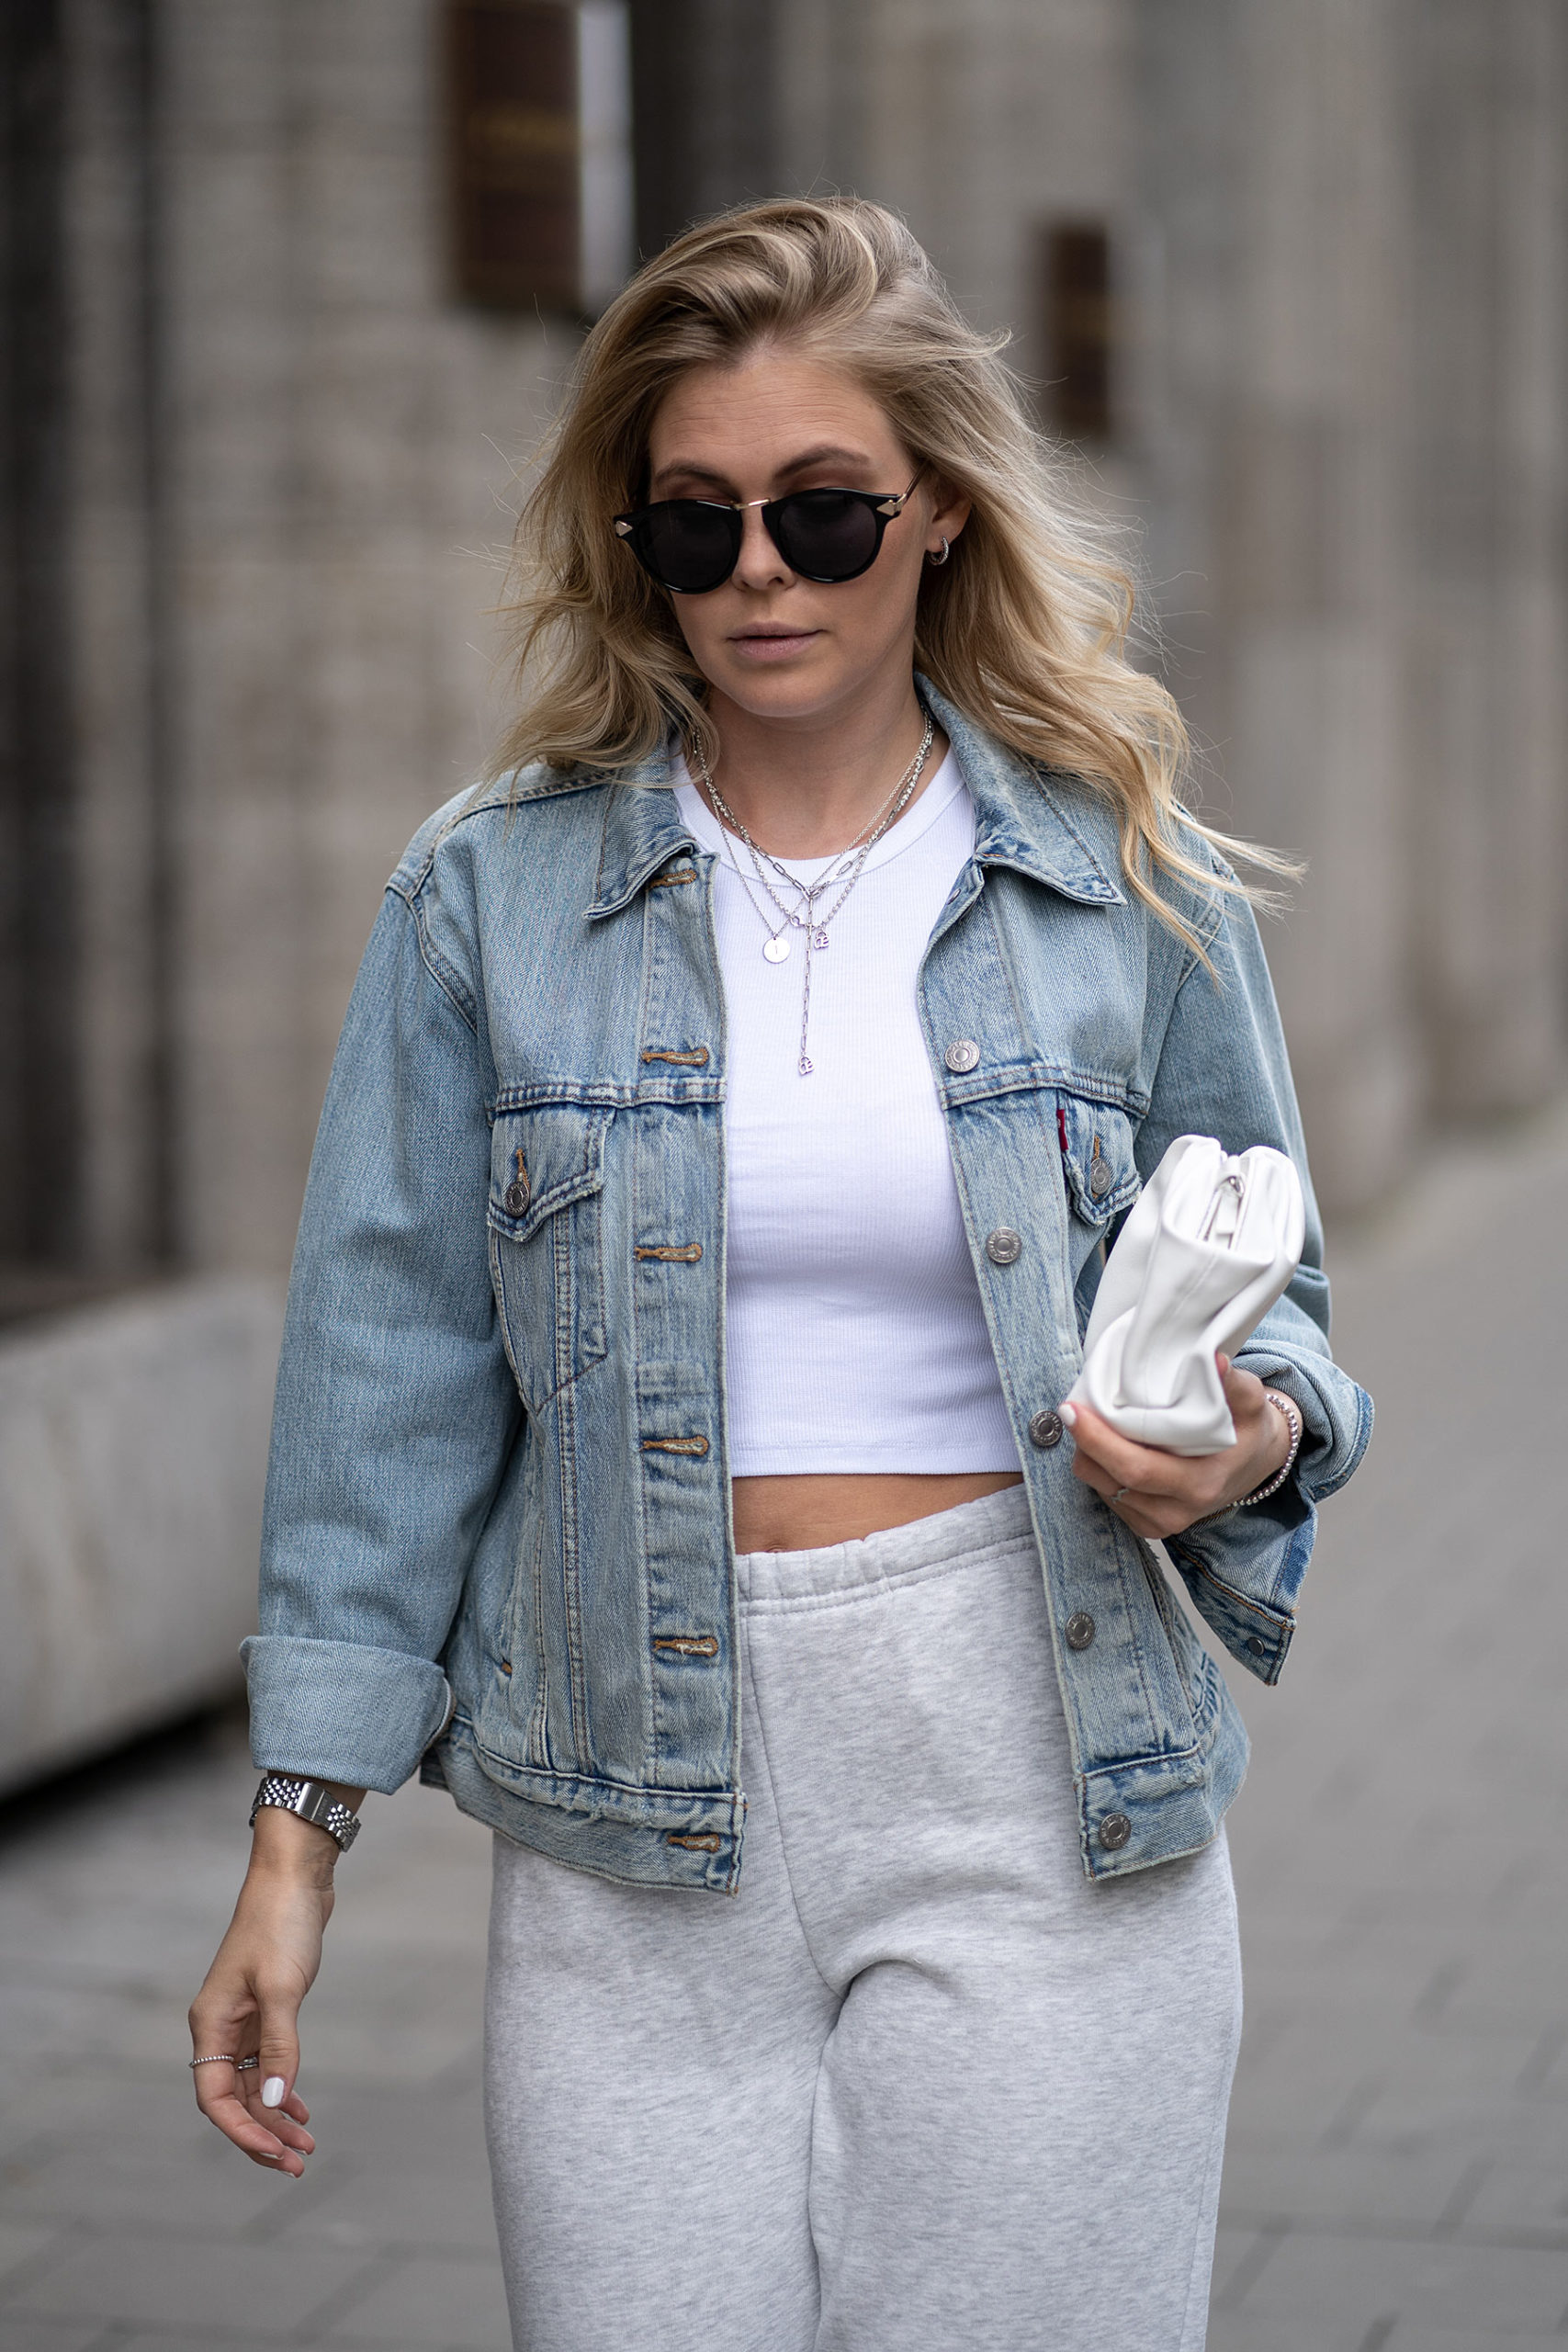 jeansjacke outfit sommer modeblog sunnyinga